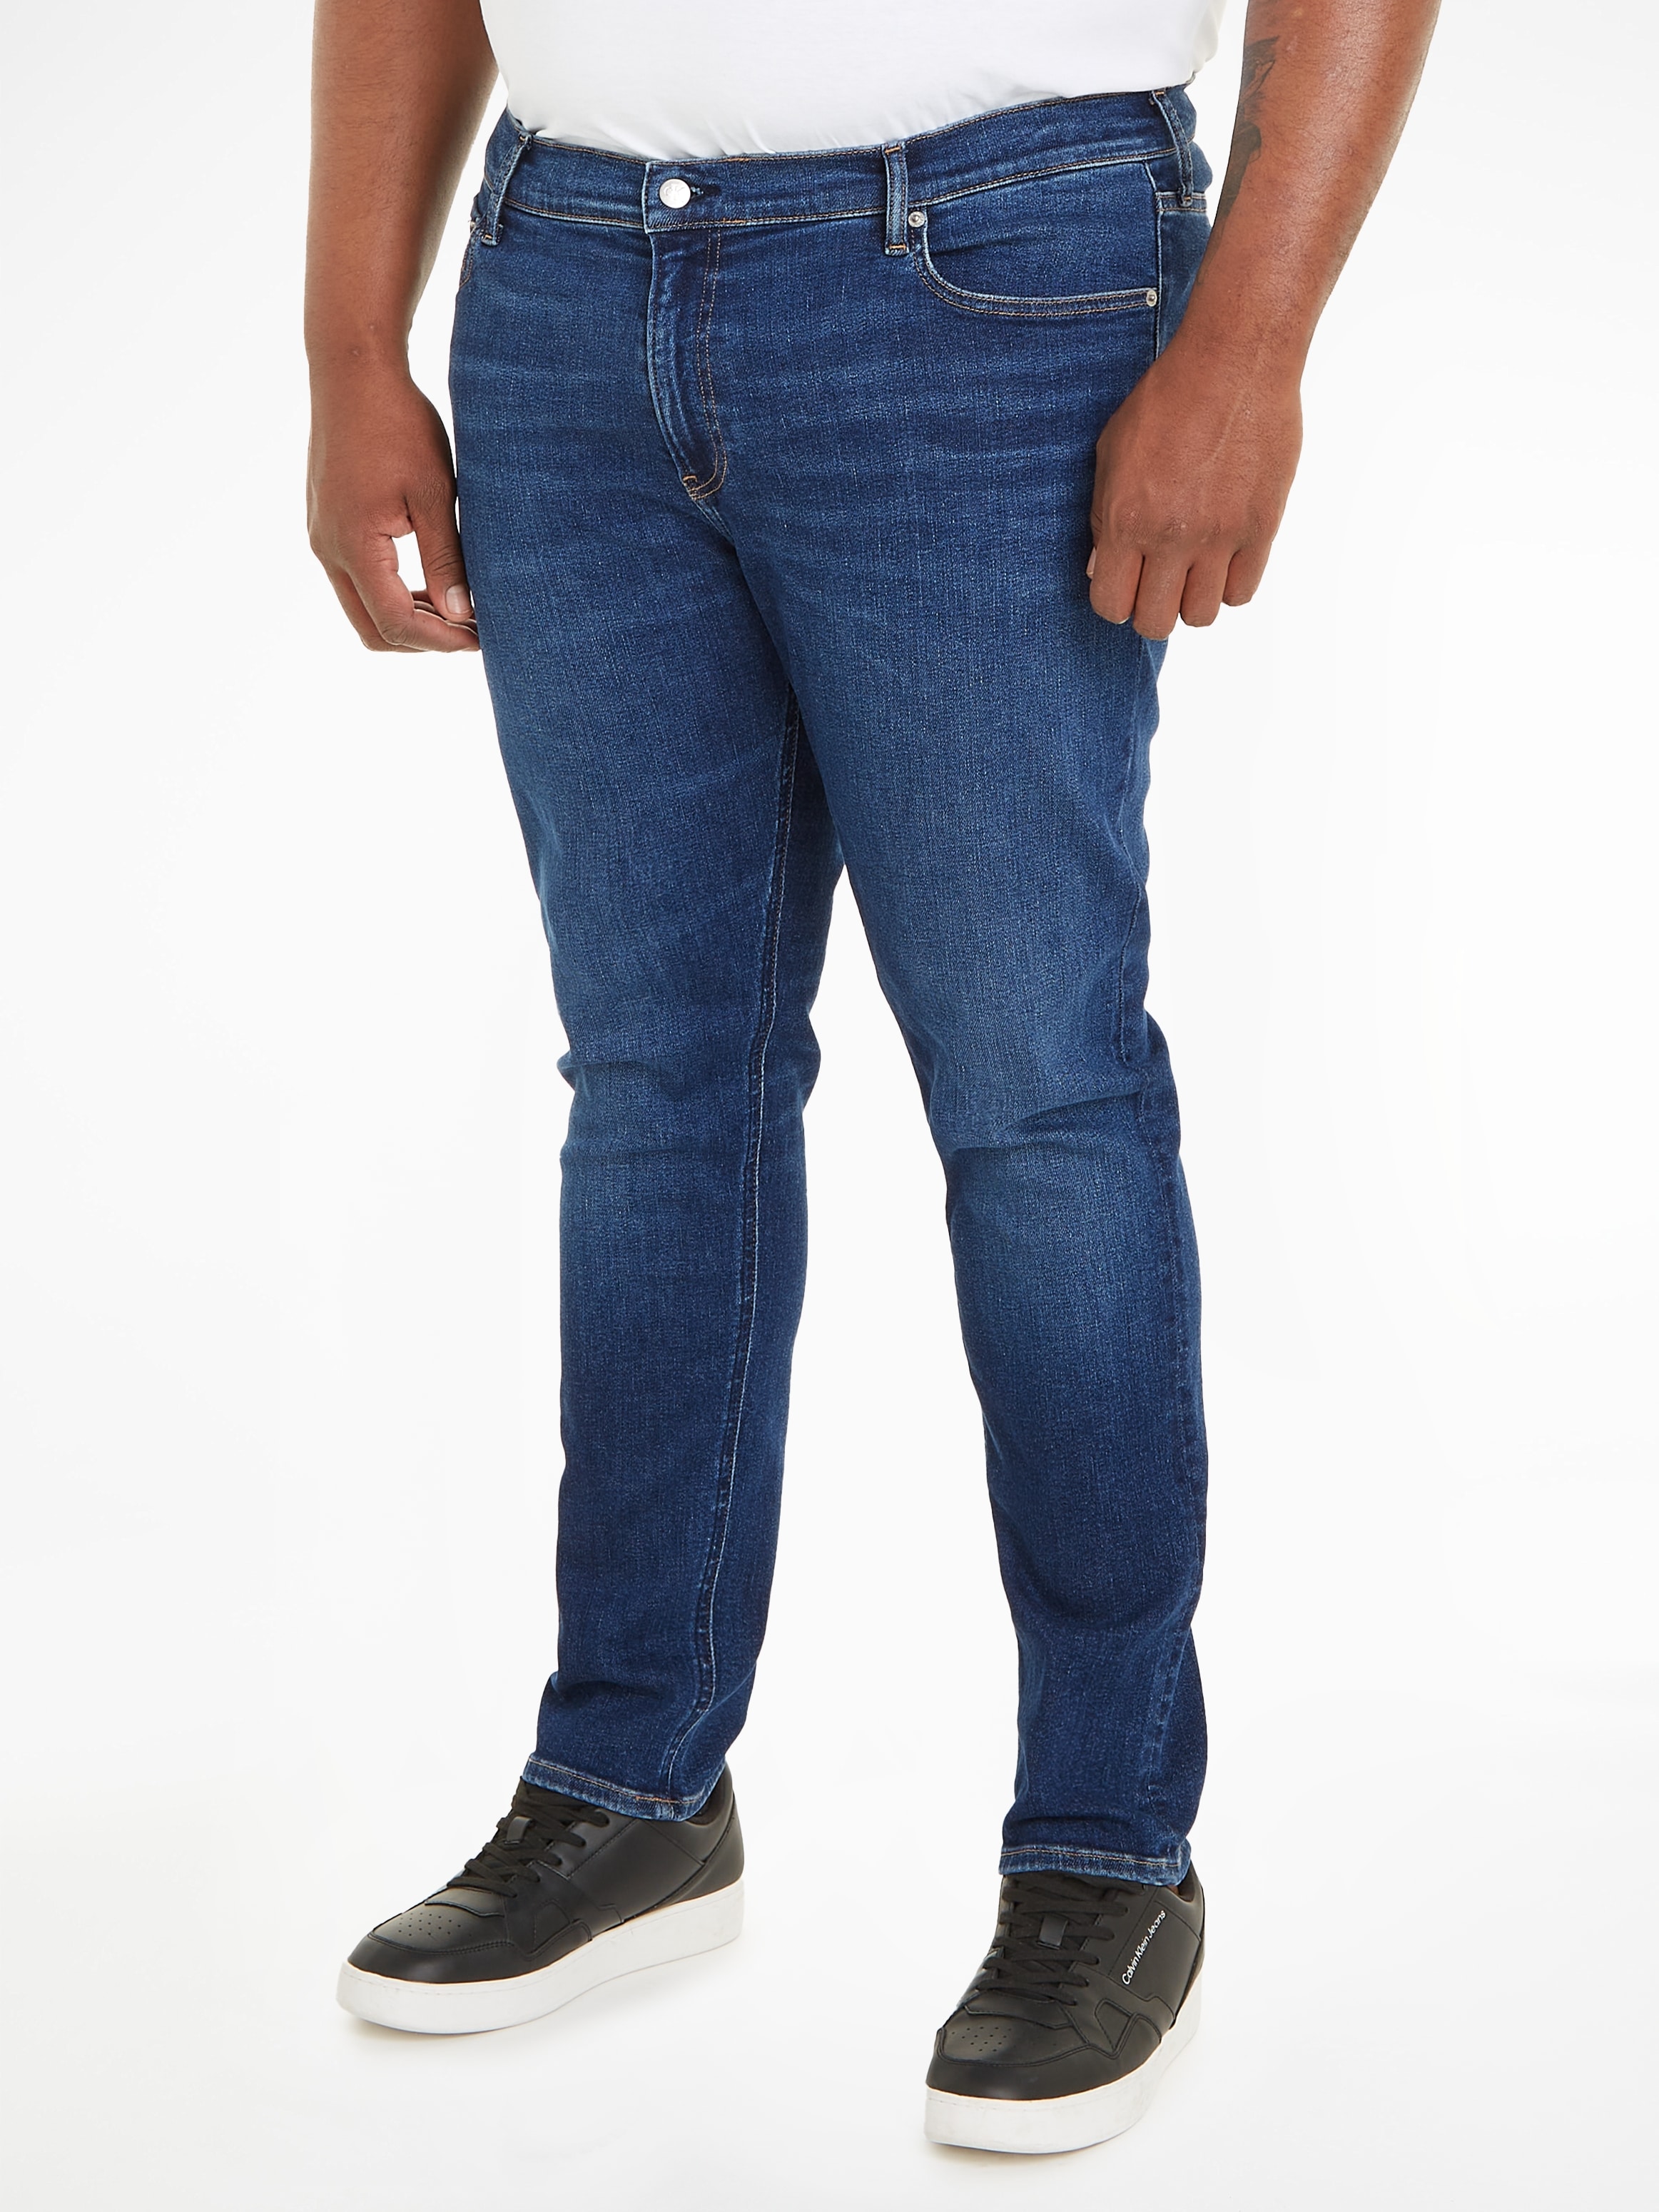 Calvin Klein Jeans Jeans ♕ bei »SKINNY Plus Weiten wird PLUS«, angeboten in Skinny-fit-Jeans